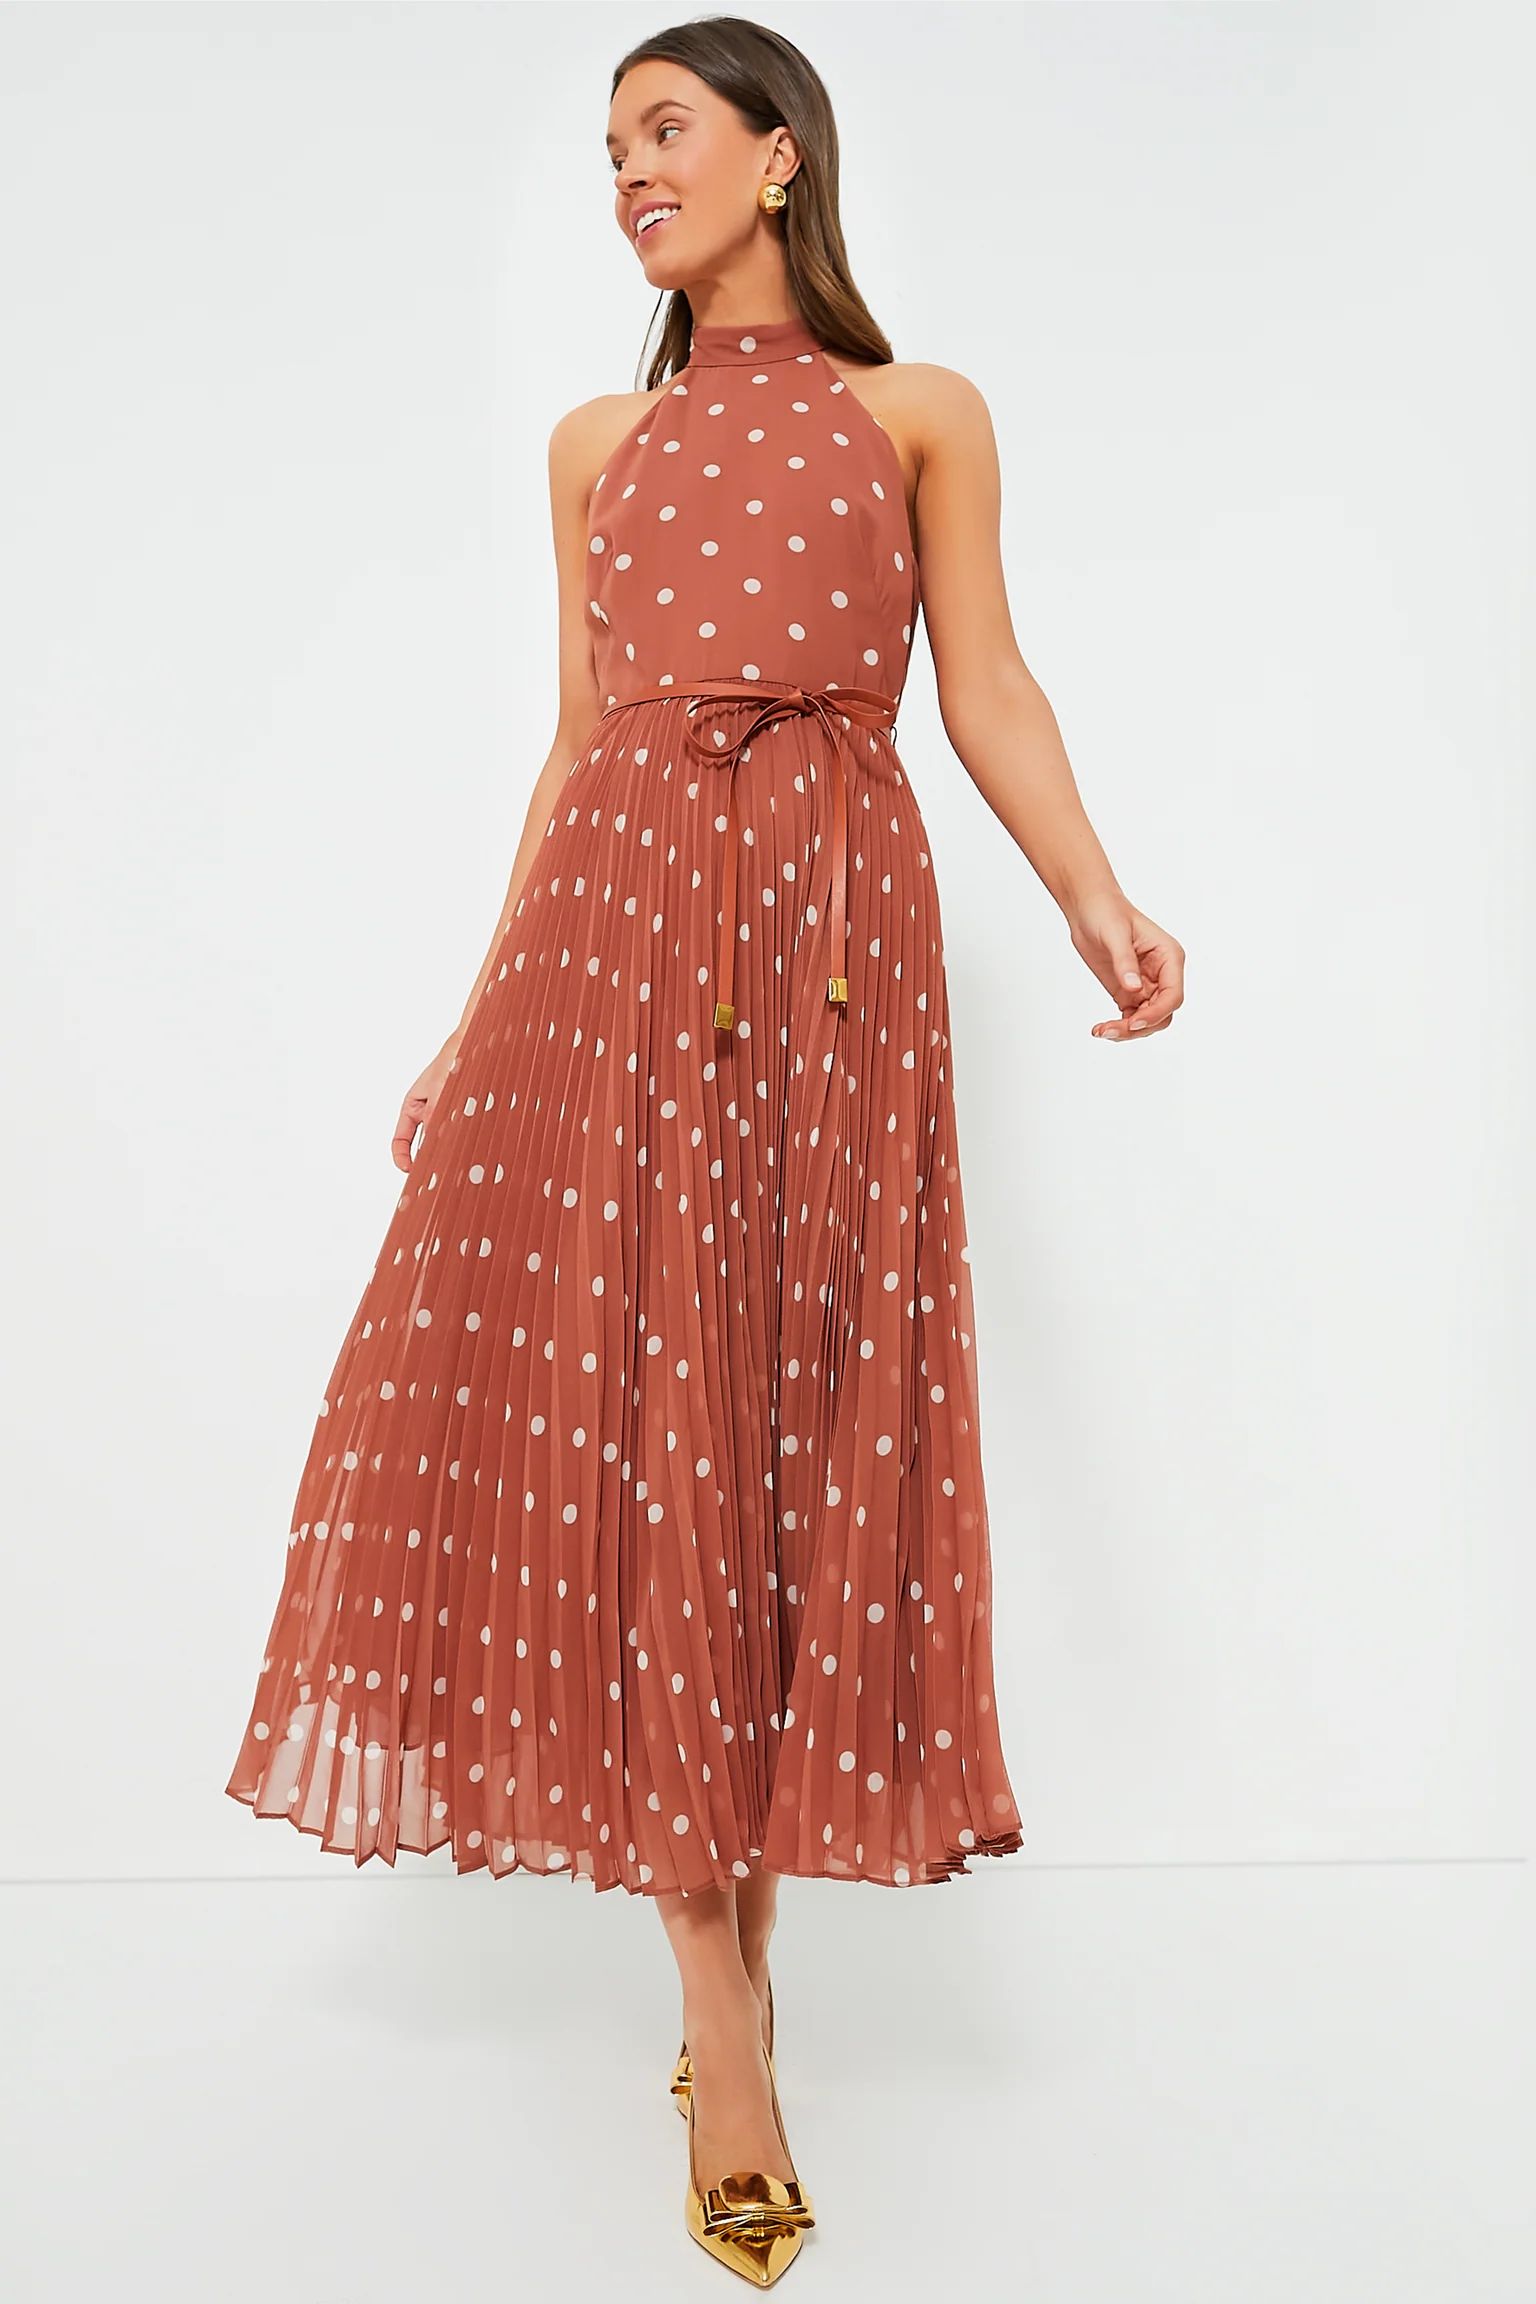 Aragon and Cream Dot Sunray Picnic Dress | Tuckernuck (US)